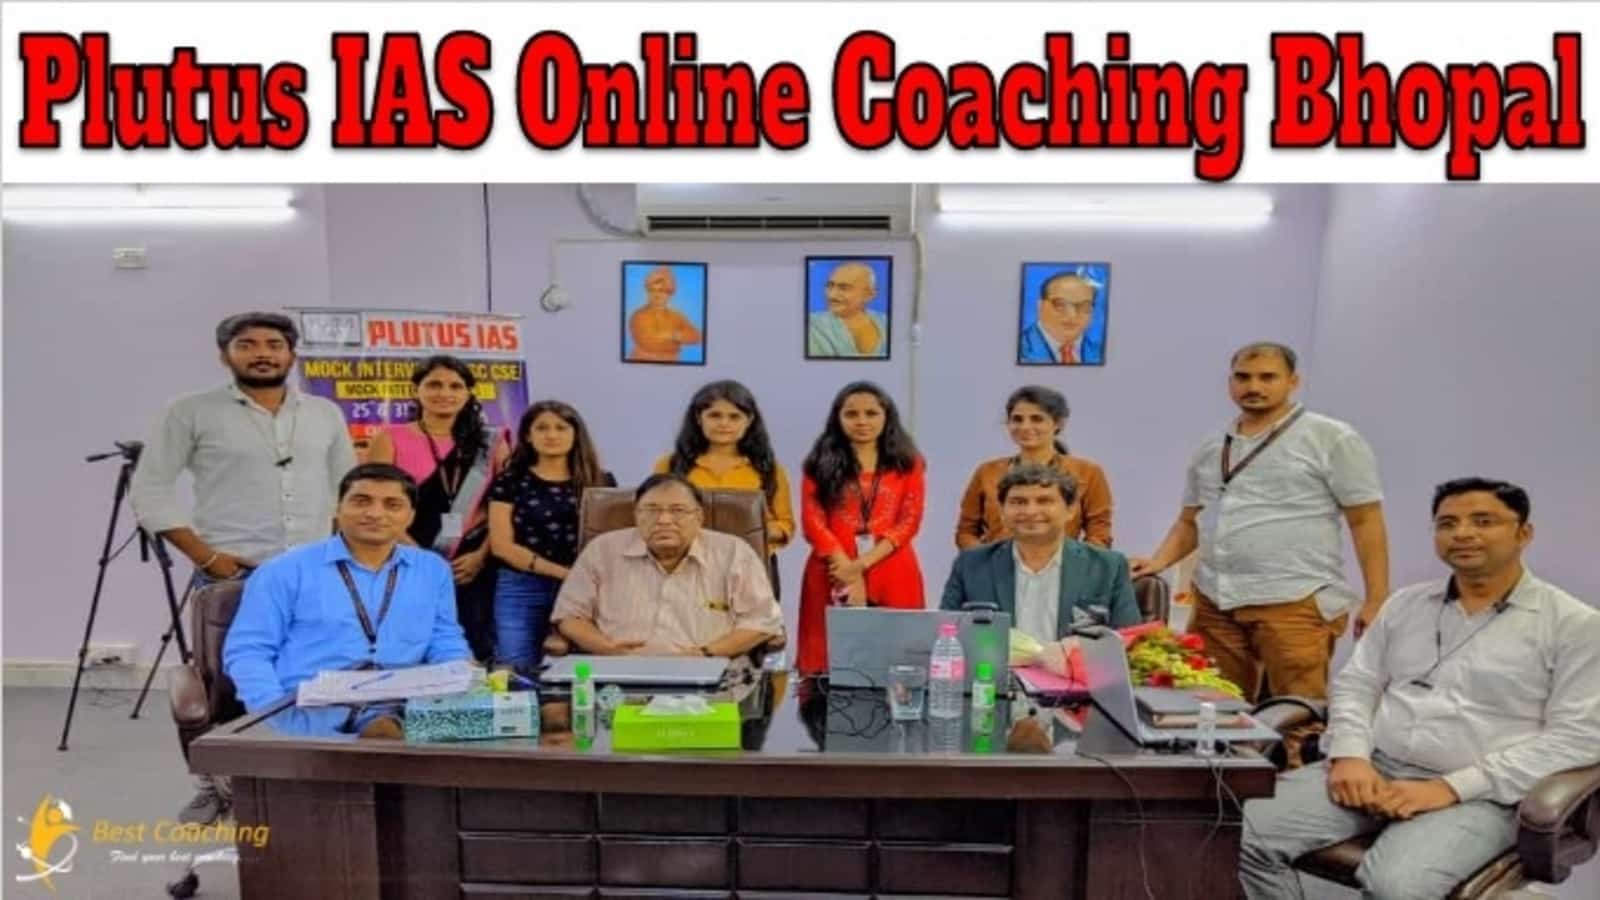 Plutus IAS Online Coaching Bhopal